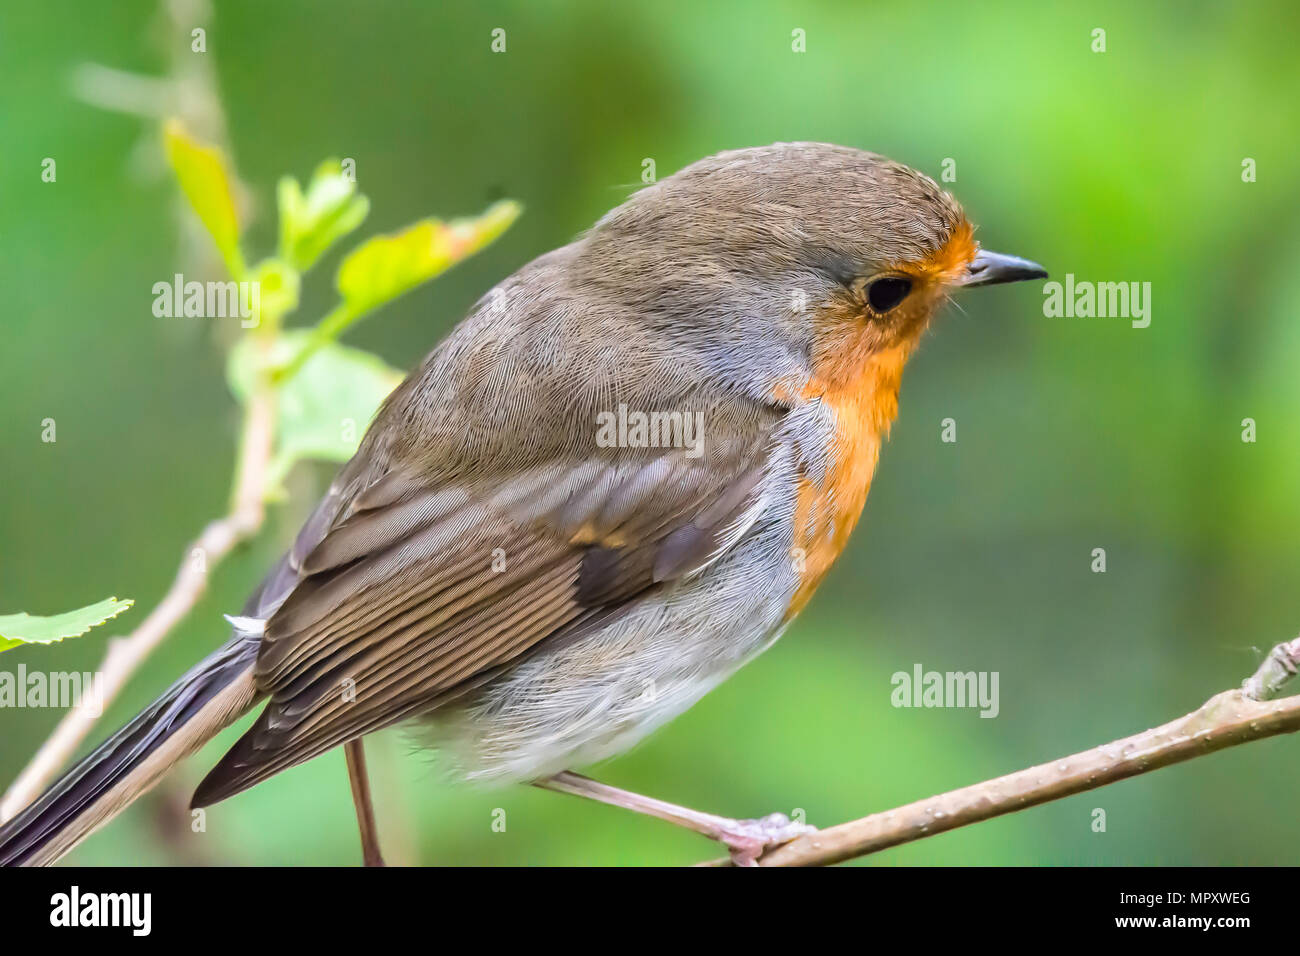 Unión robin cerca.cute little bird, sentado sobre la rama de un árbol en los bosques.Naturaleza Uk.British wildlife en primavera.Naturaleza detalles.mundo natural. Foto de stock